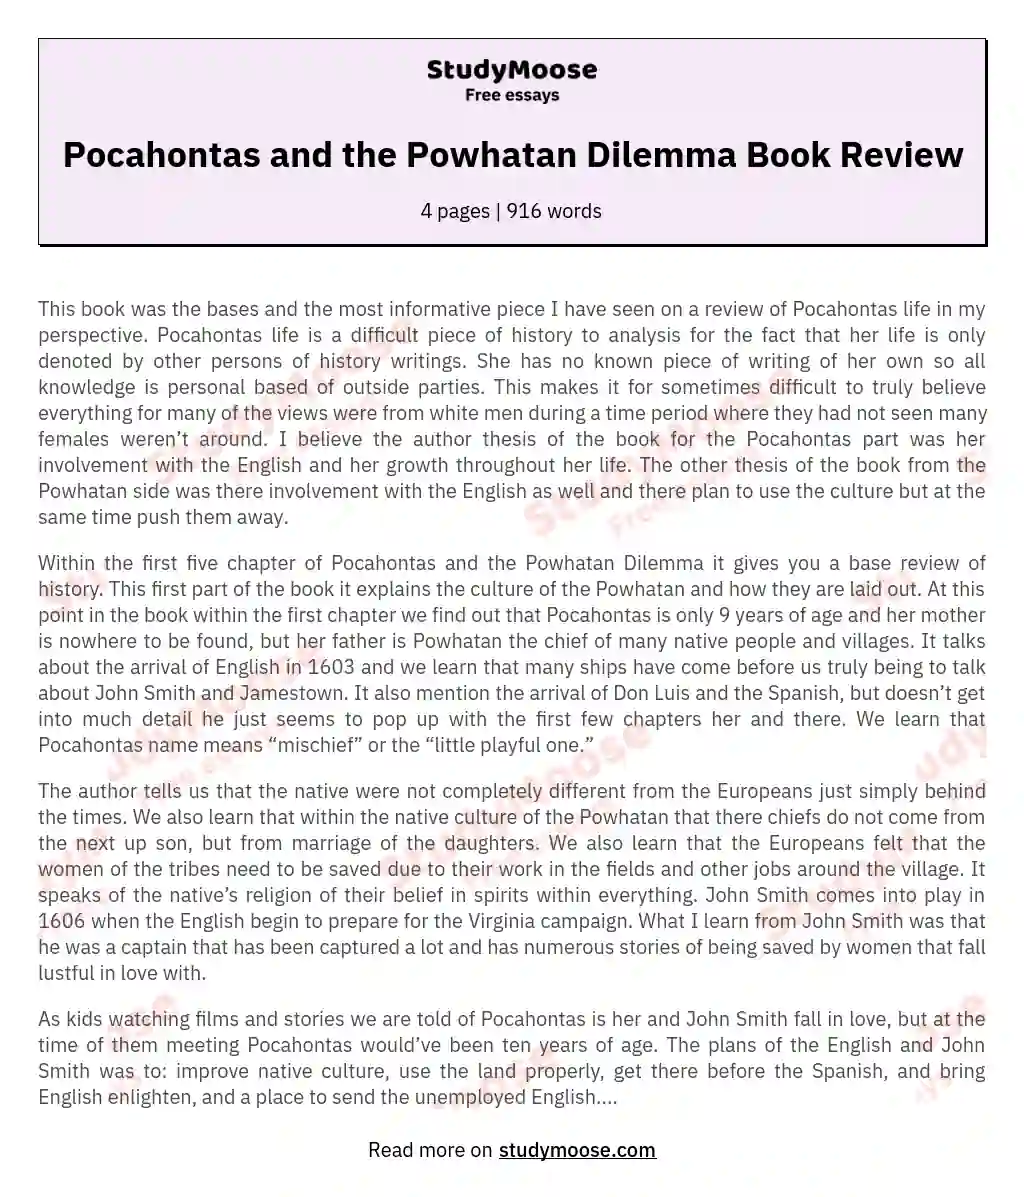 Pocahontas and the Powhatan Dilemma Book Review essay